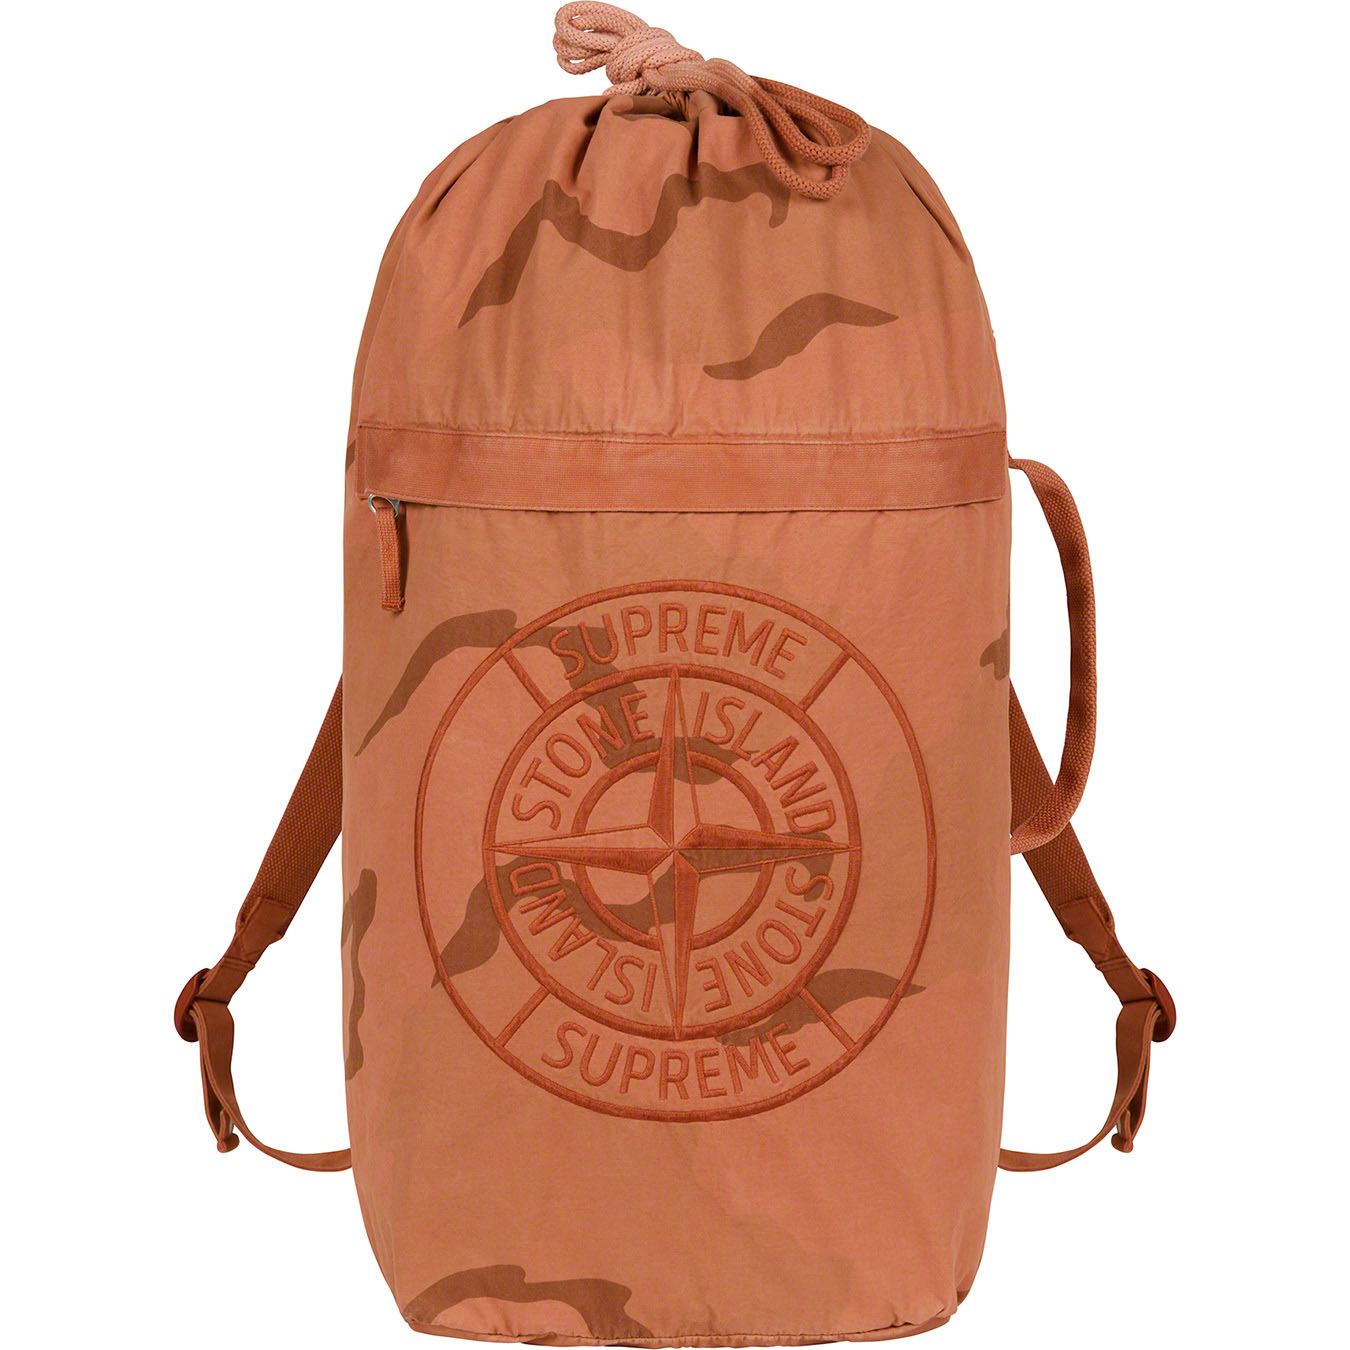 Supreme®/Stone Island® Camo Backpack